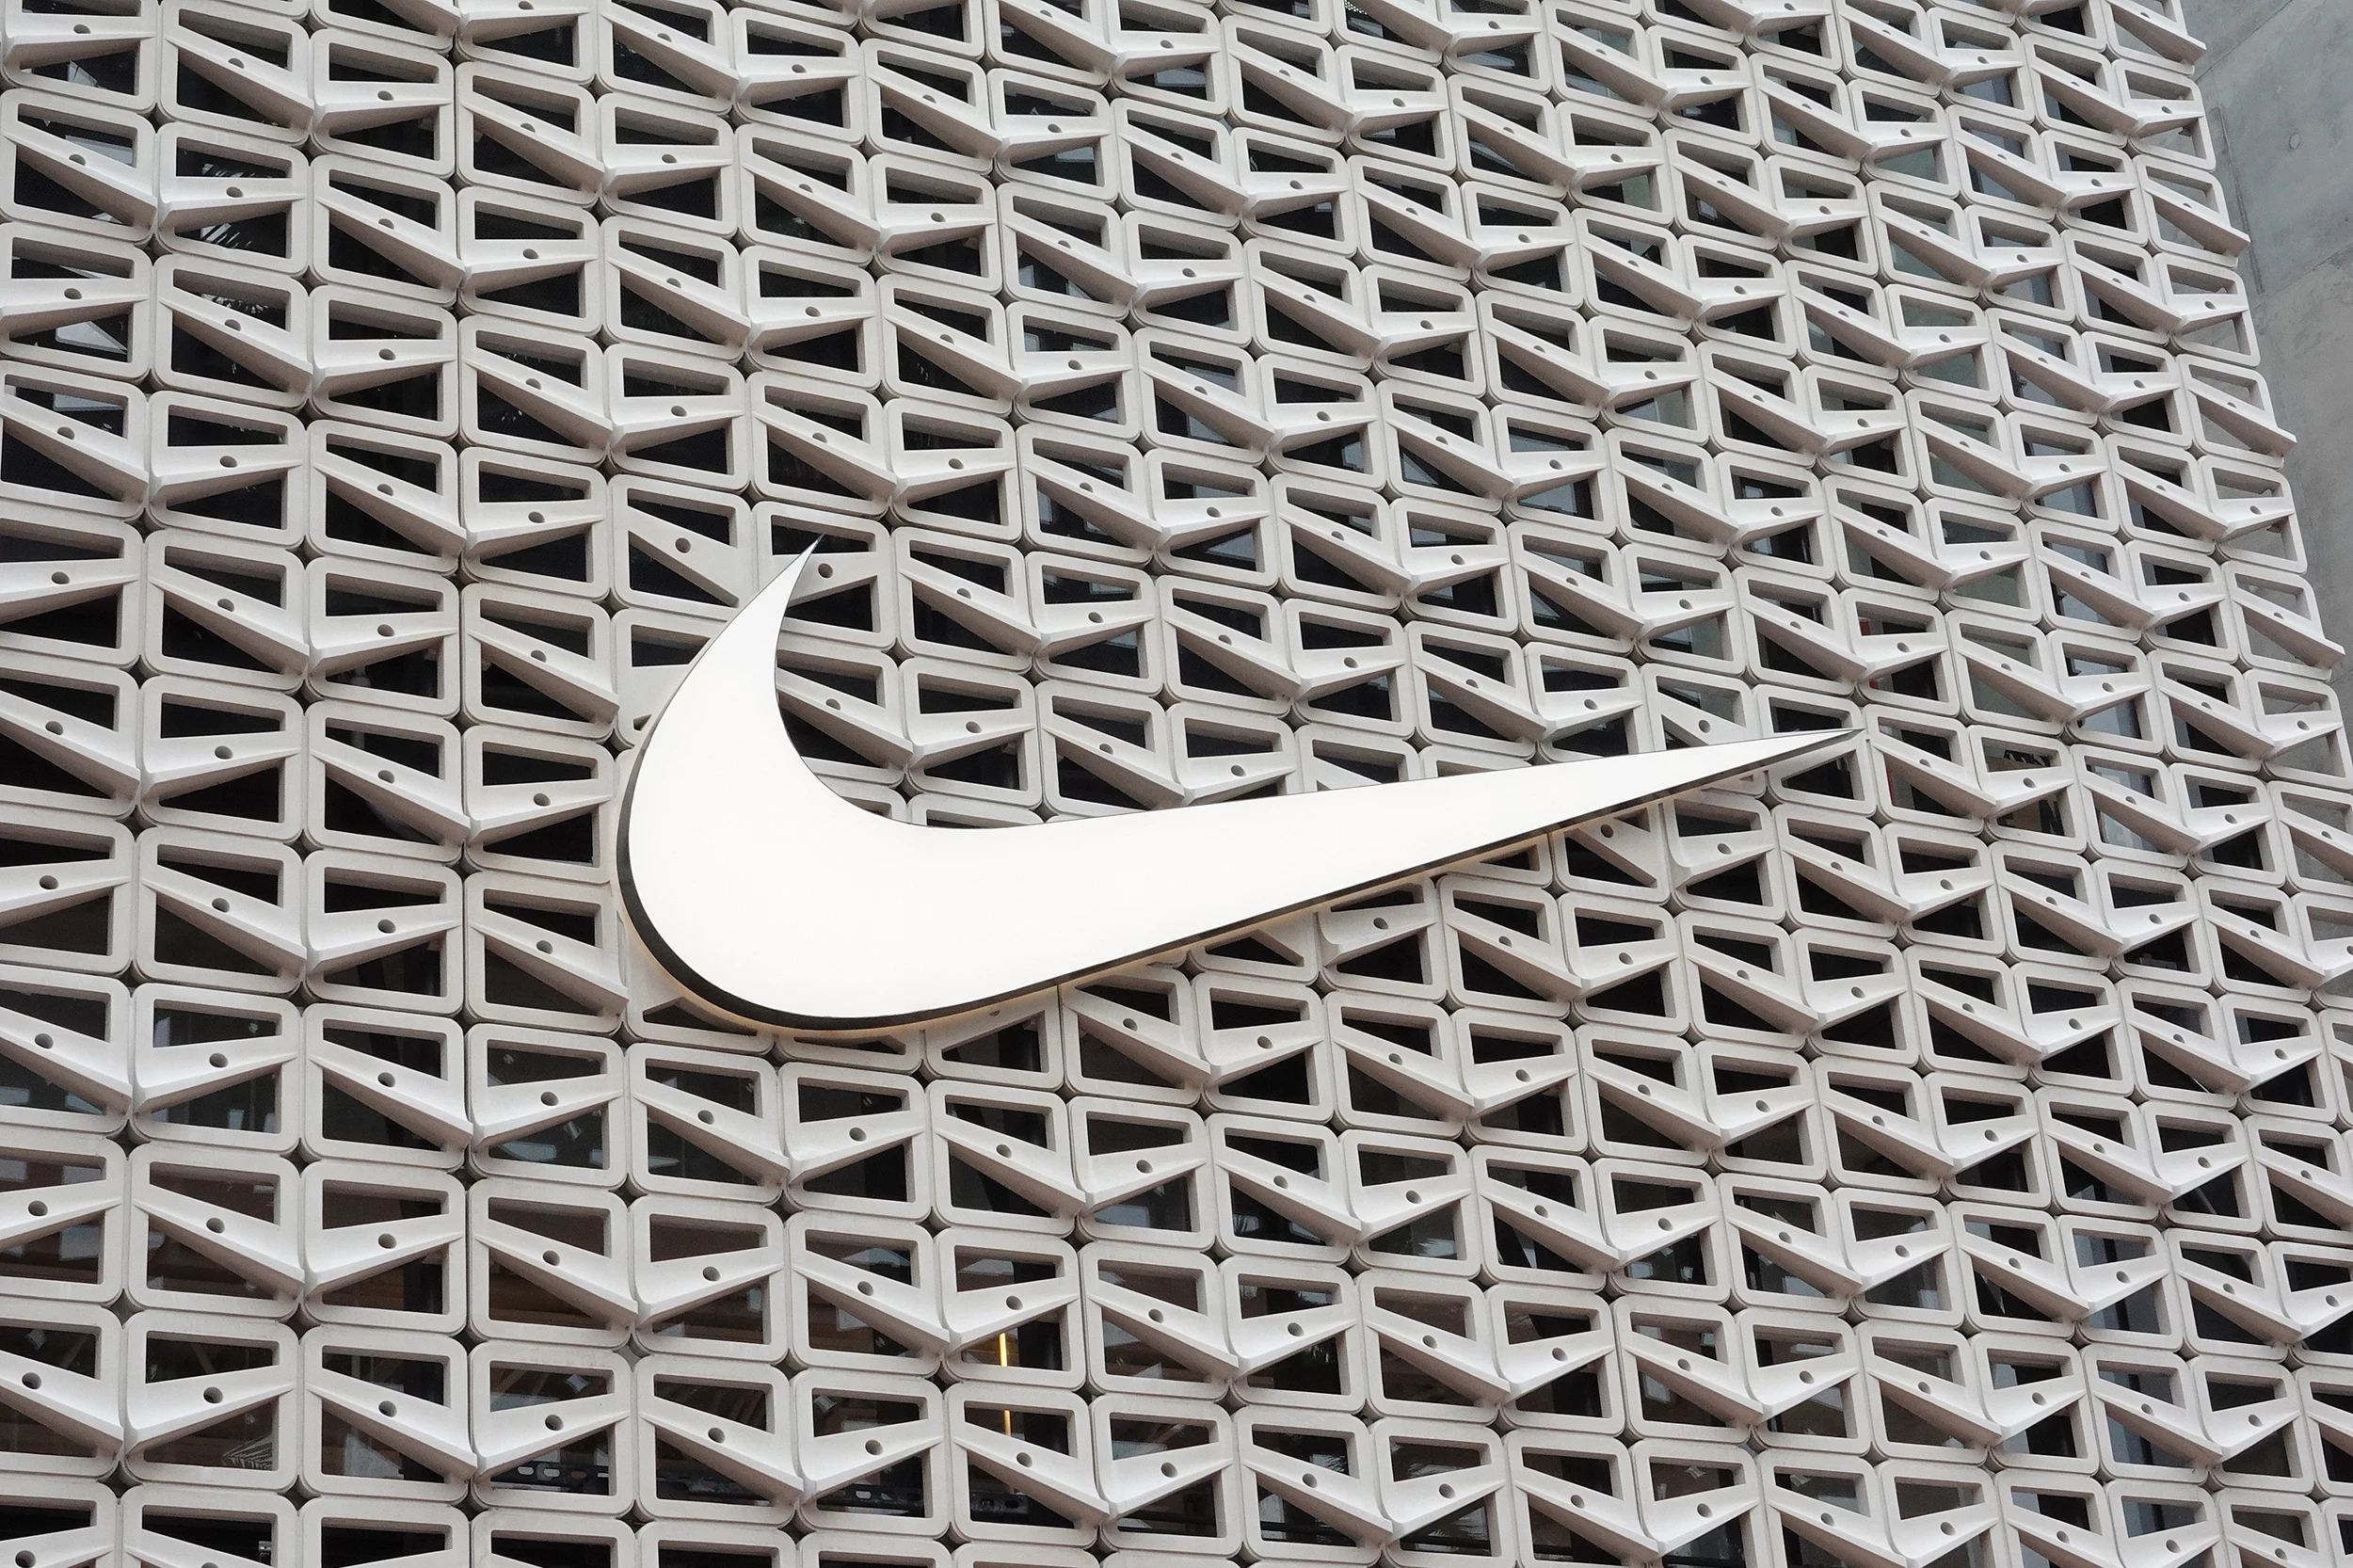 Nike Live Store to Open at The Promenade in Marlton NJ Nov 17